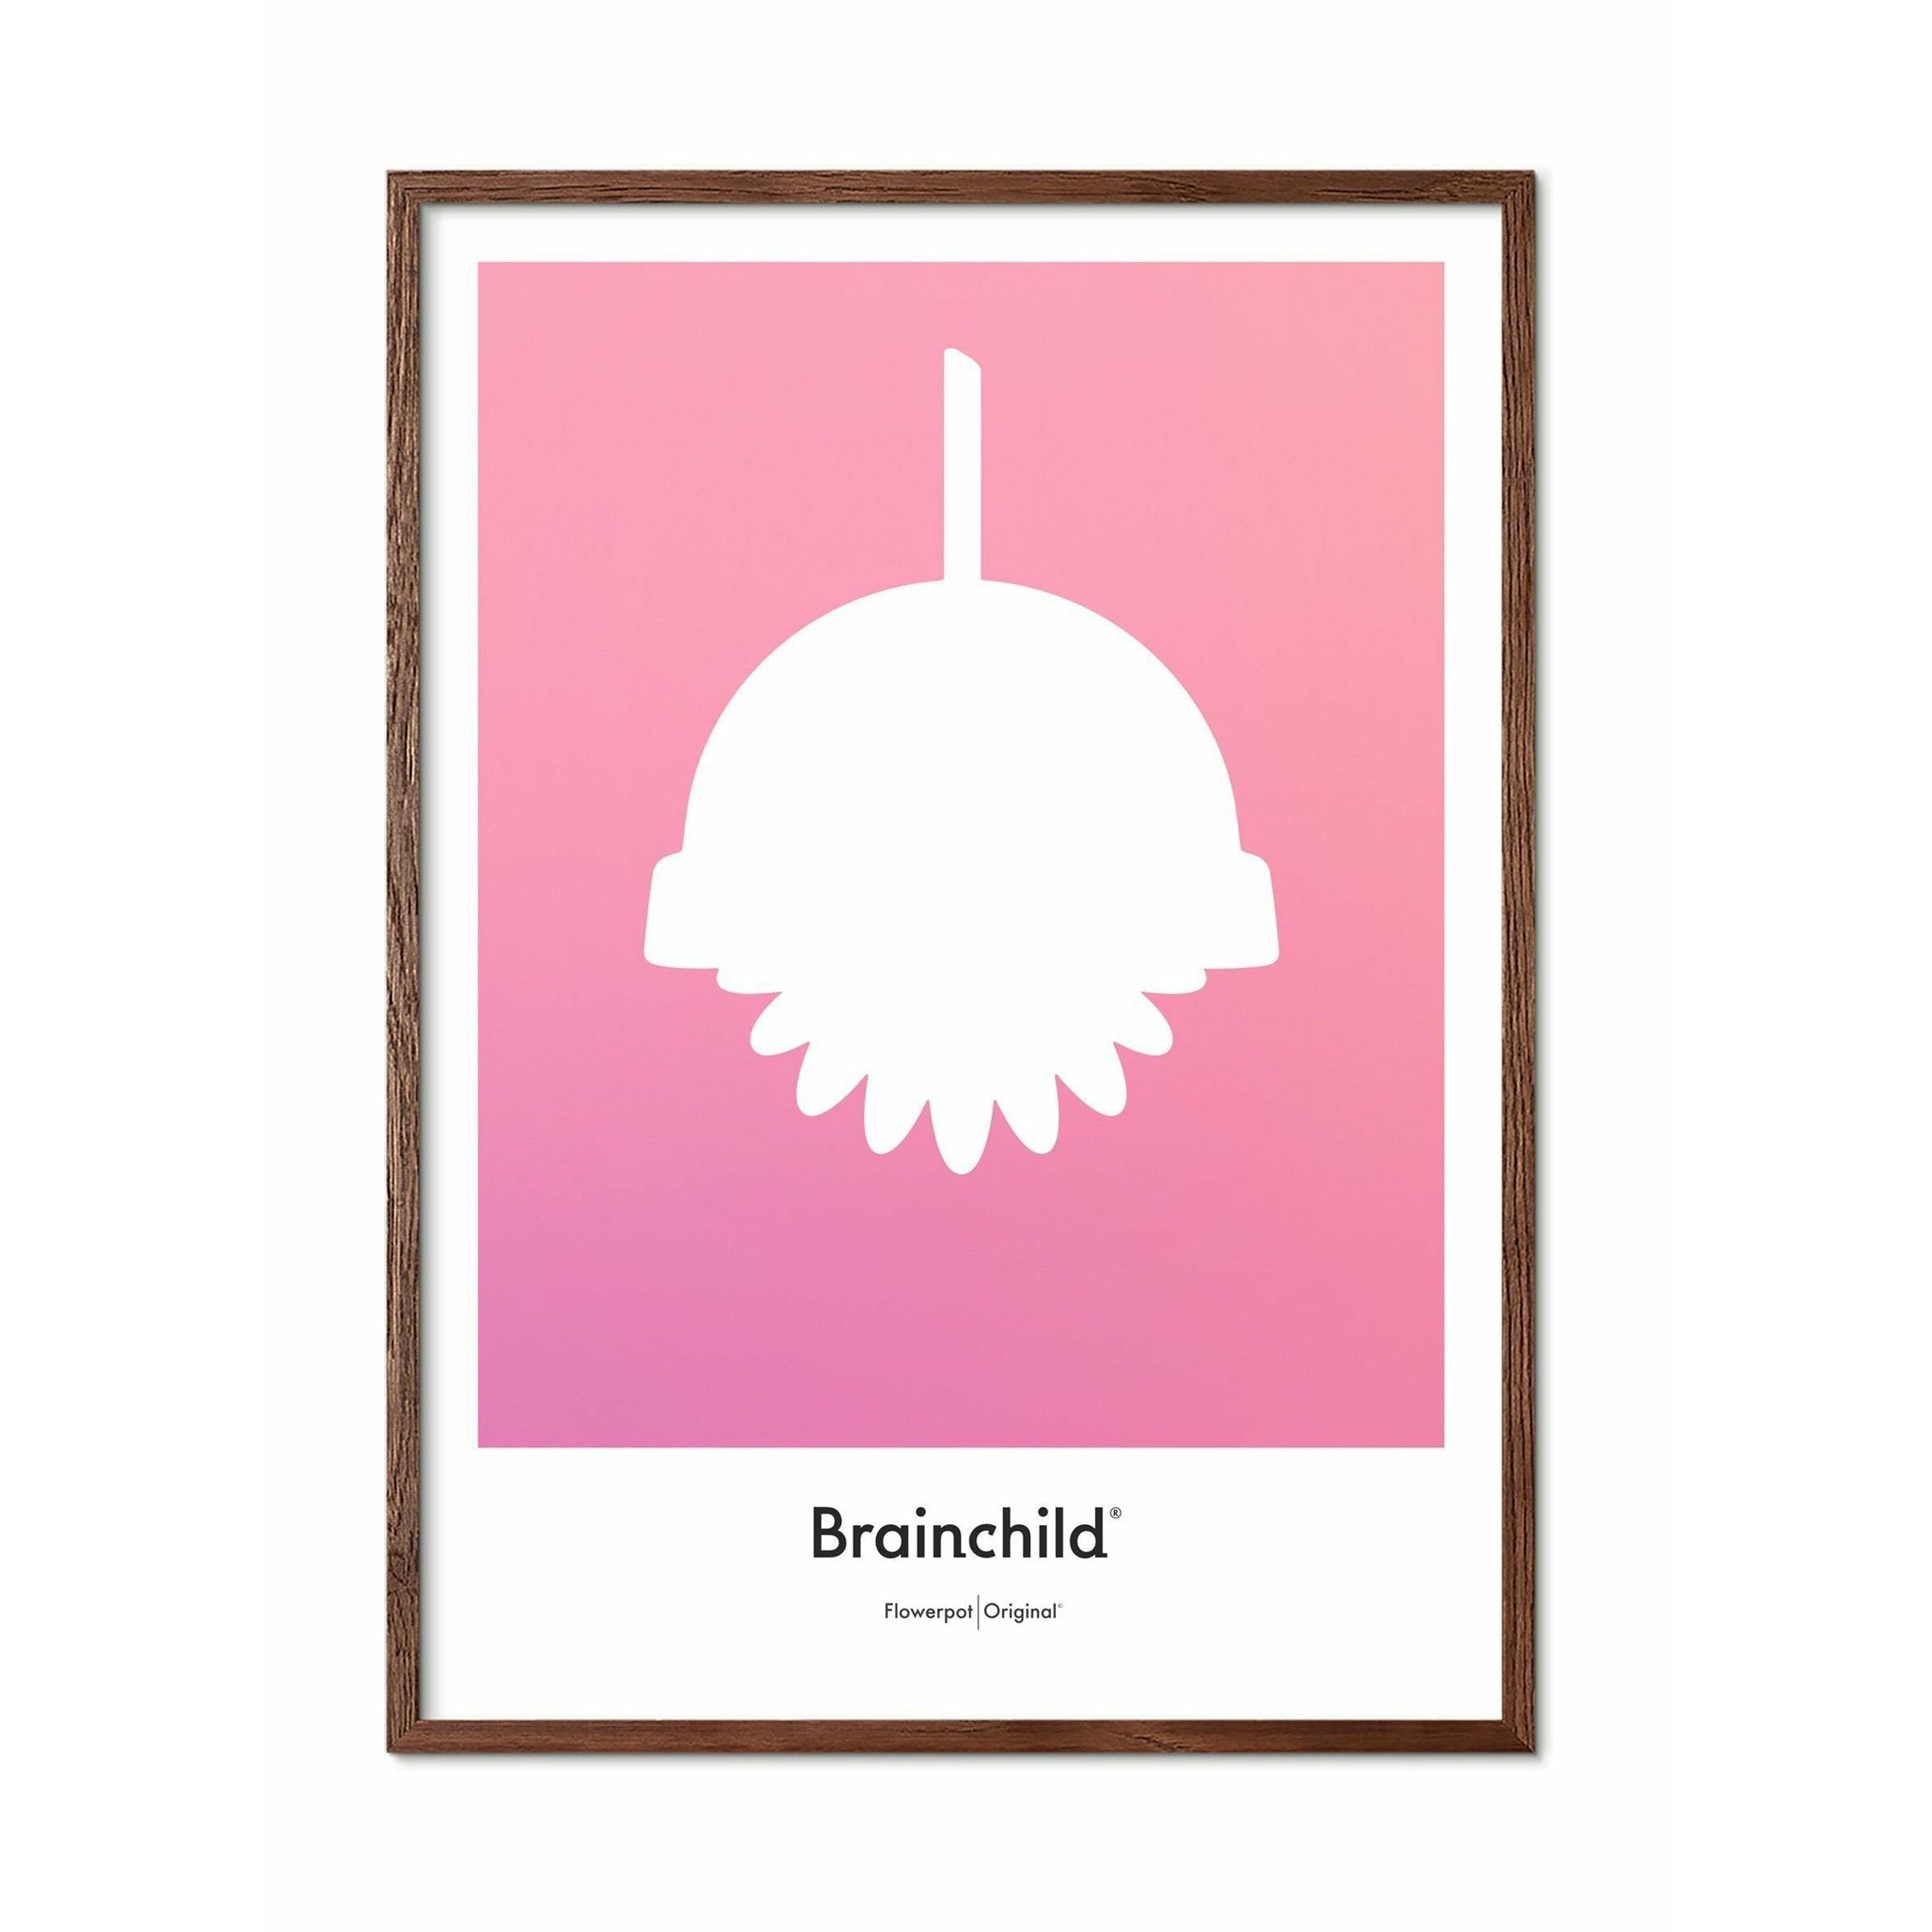 Brainchild Blumentopf Design Icon Poster, Rahmen aus dunklem Holz 30x40 Cm, Rosa